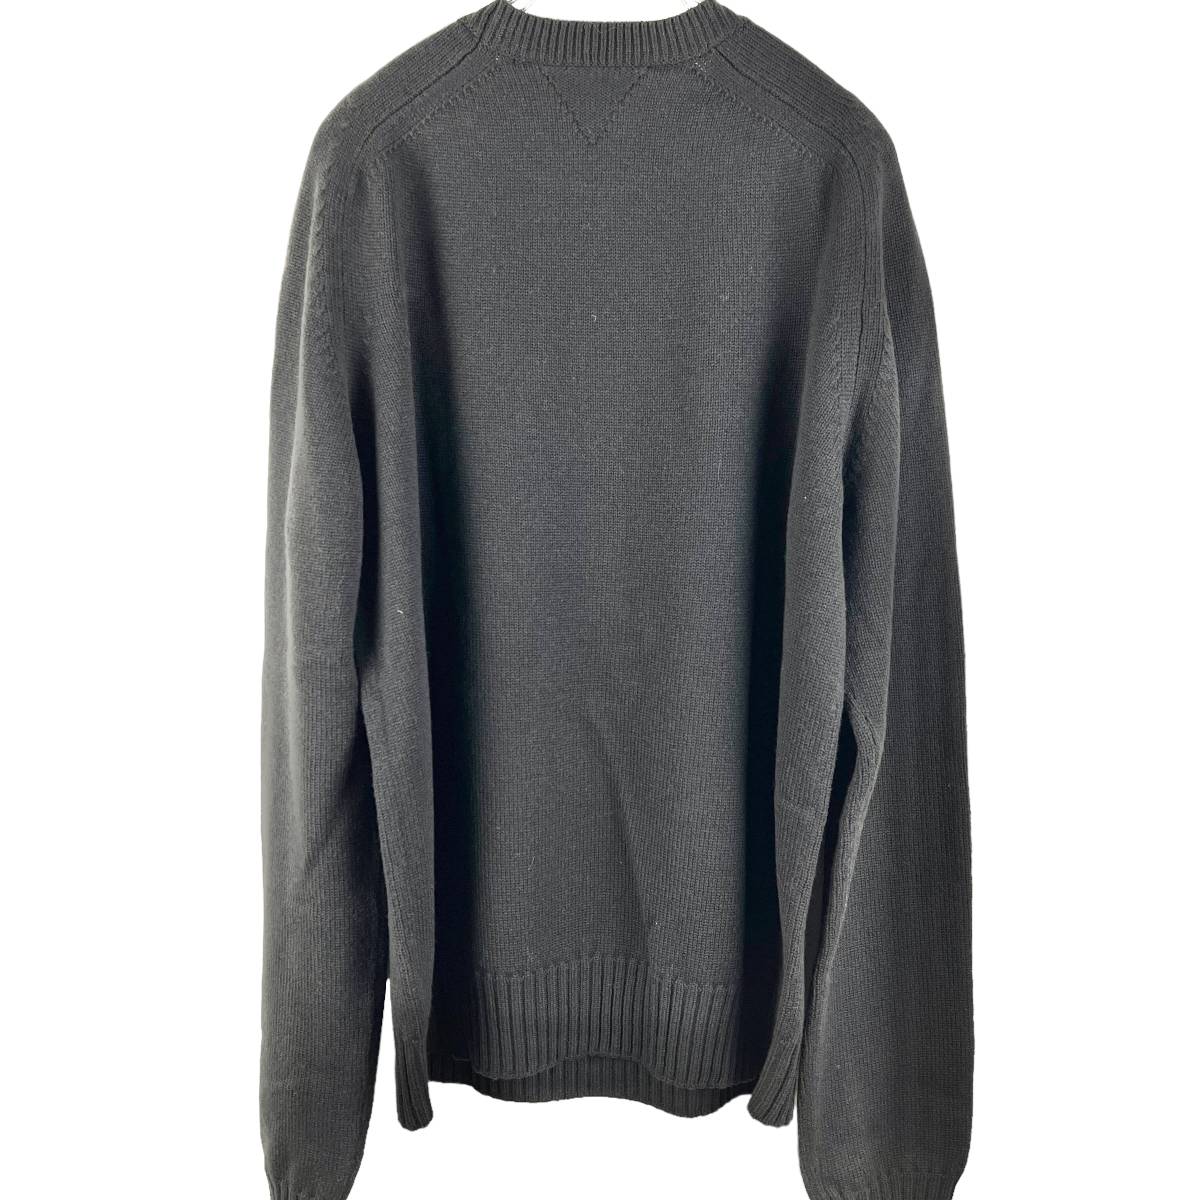 Bottega Veneta(ボッテガ ヴェネタ) Wool Pull Sweater Knit 2020AW (brown)_画像6